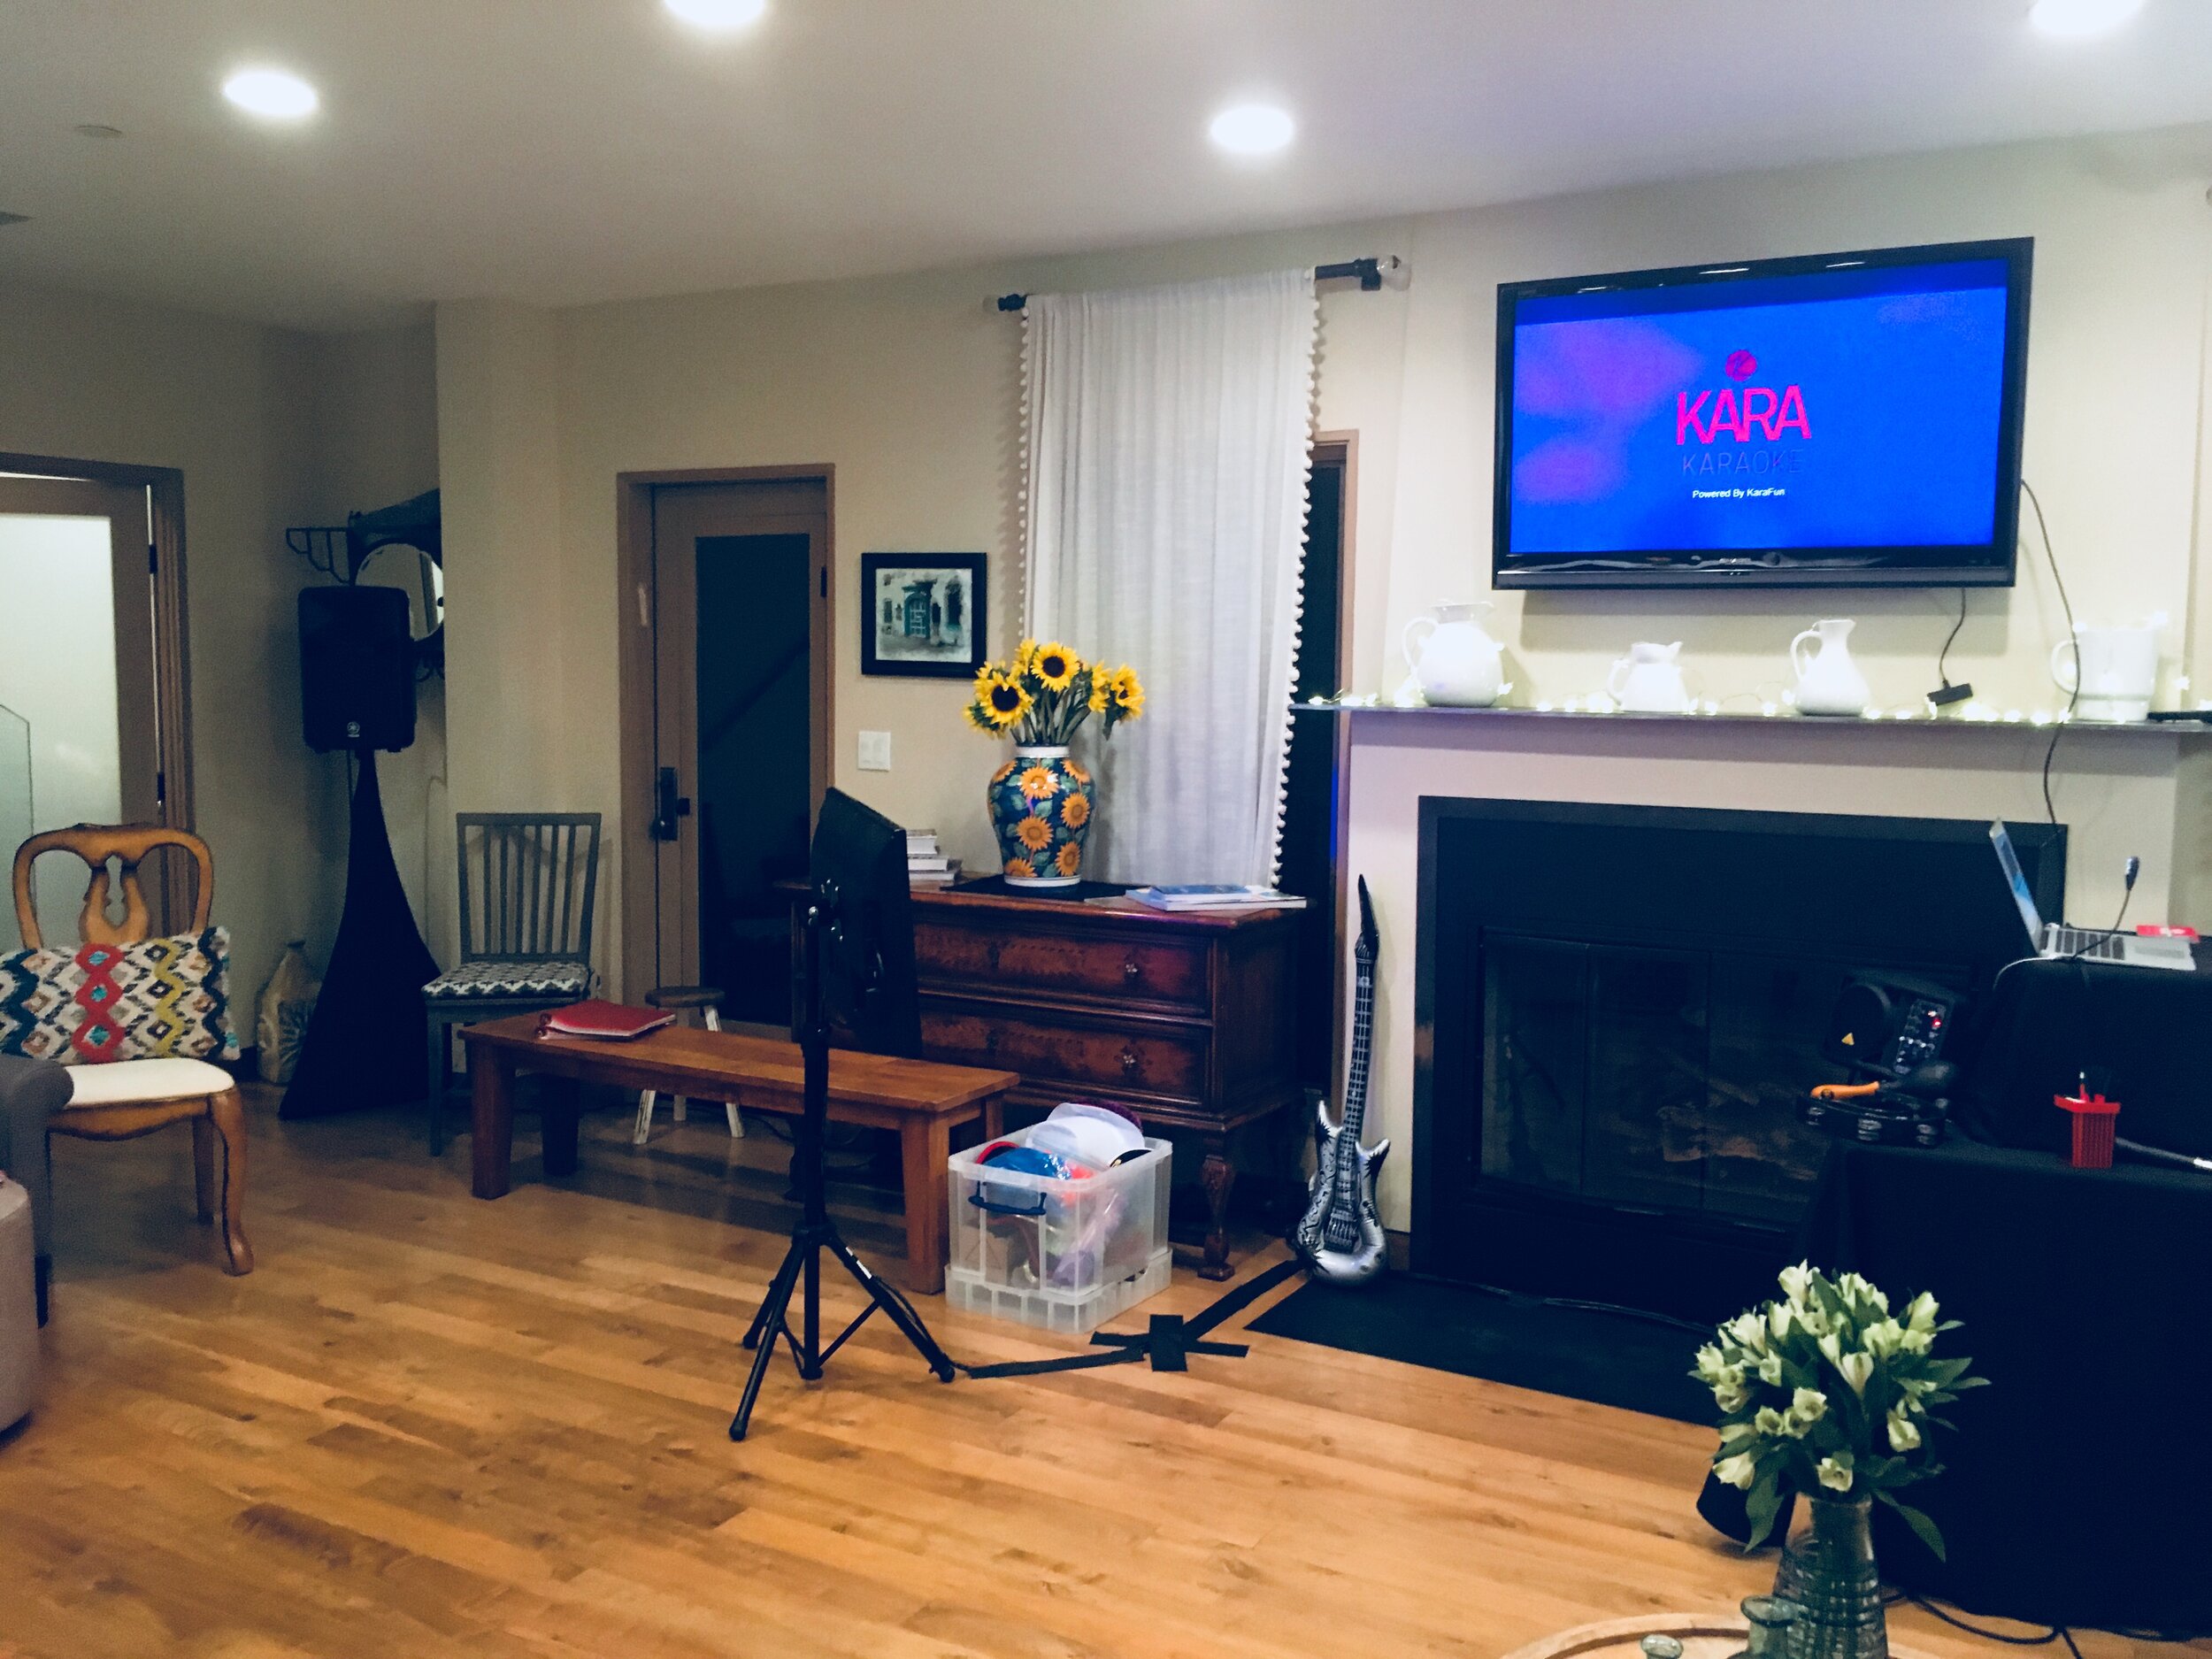 Kara Karaoke - Living Room Set Up 4.jpg